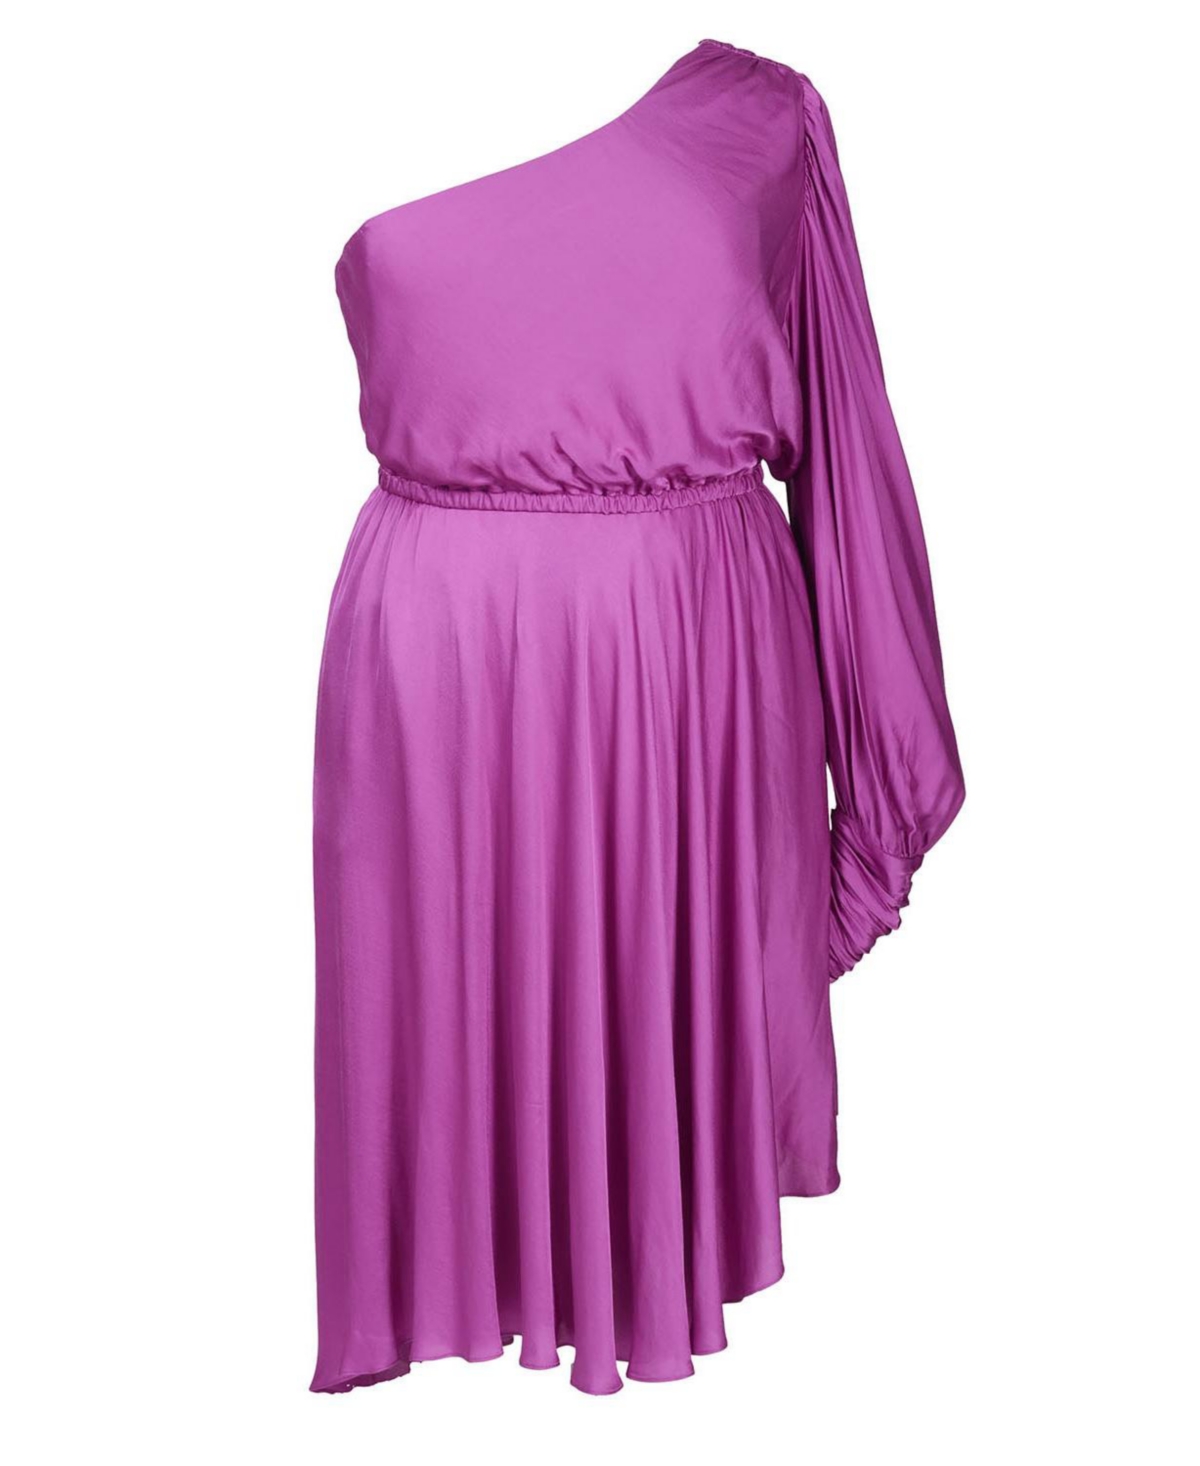 - Women's Plus Size Olivia One Shoulder Dress - Berry